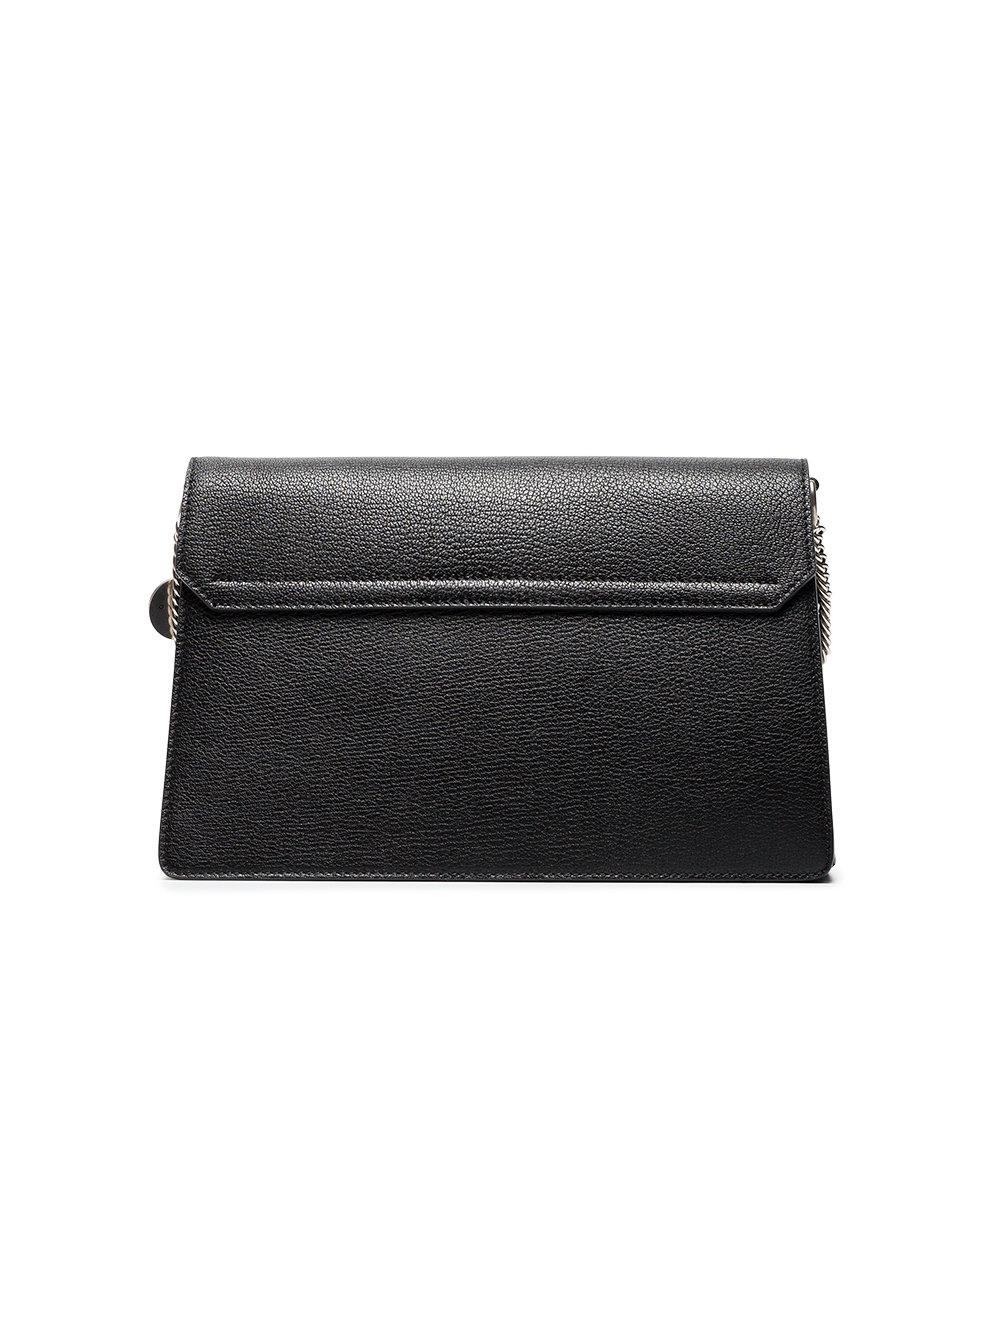 Givenchy Leather Medium Gv3 Bag in Black | Lyst